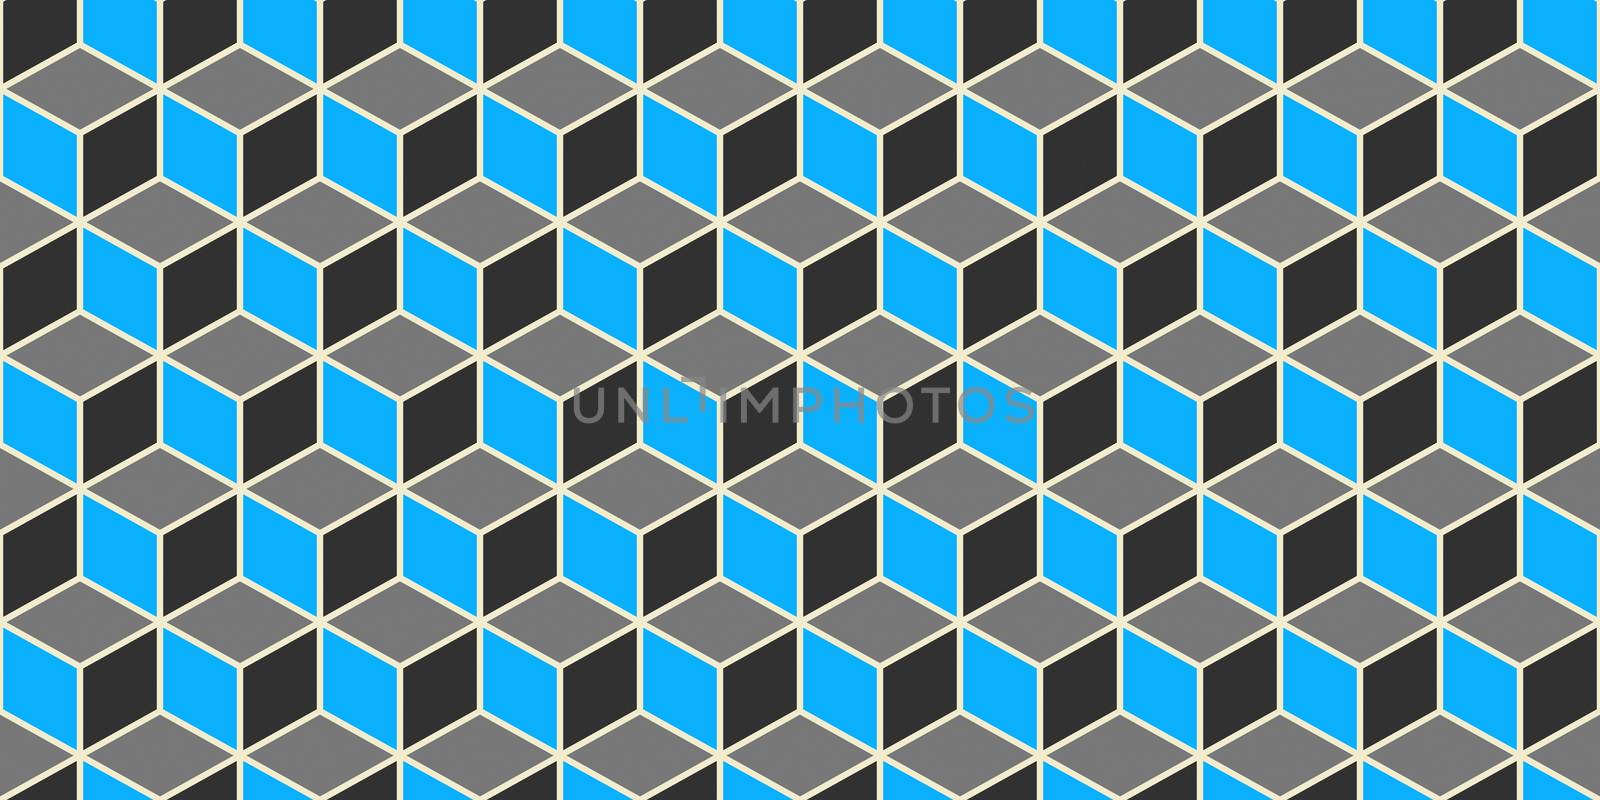 Blue Grey Seamless Cube Pattern Background. Isometric Blocks Texture. Geometric 3d Mosaic Backdrop.